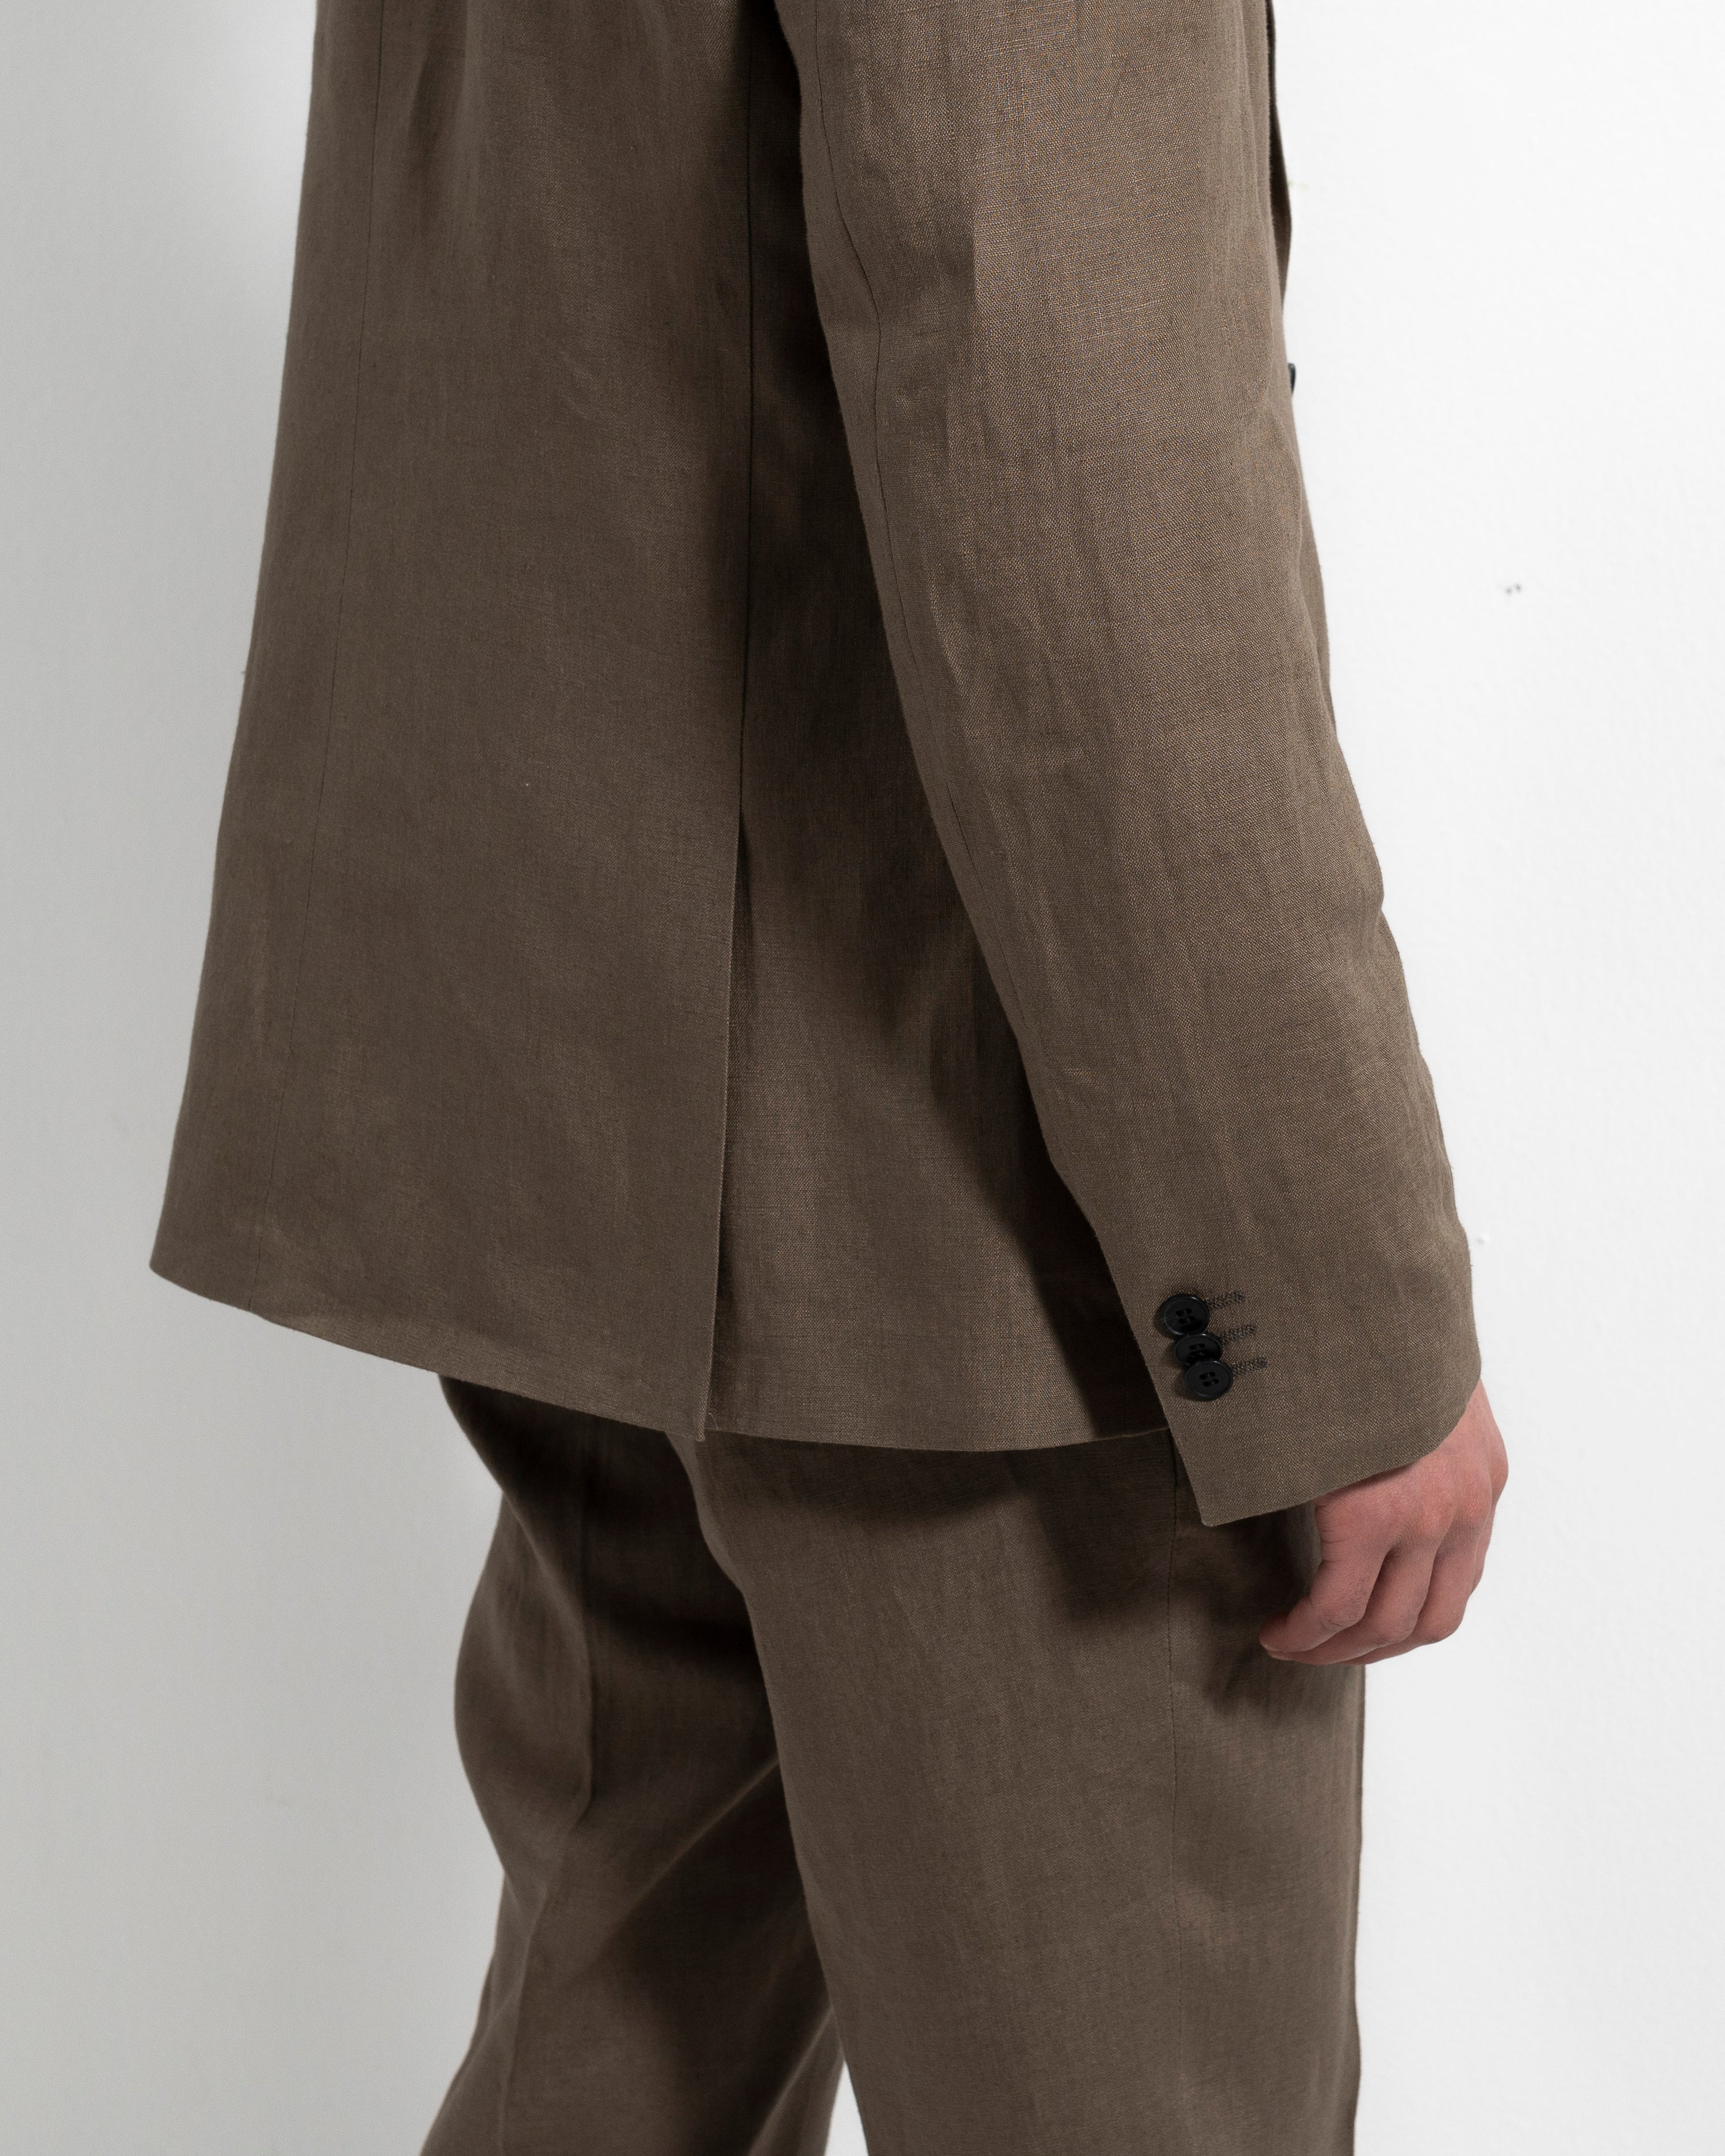 Airo Linen Suit - Mud Green